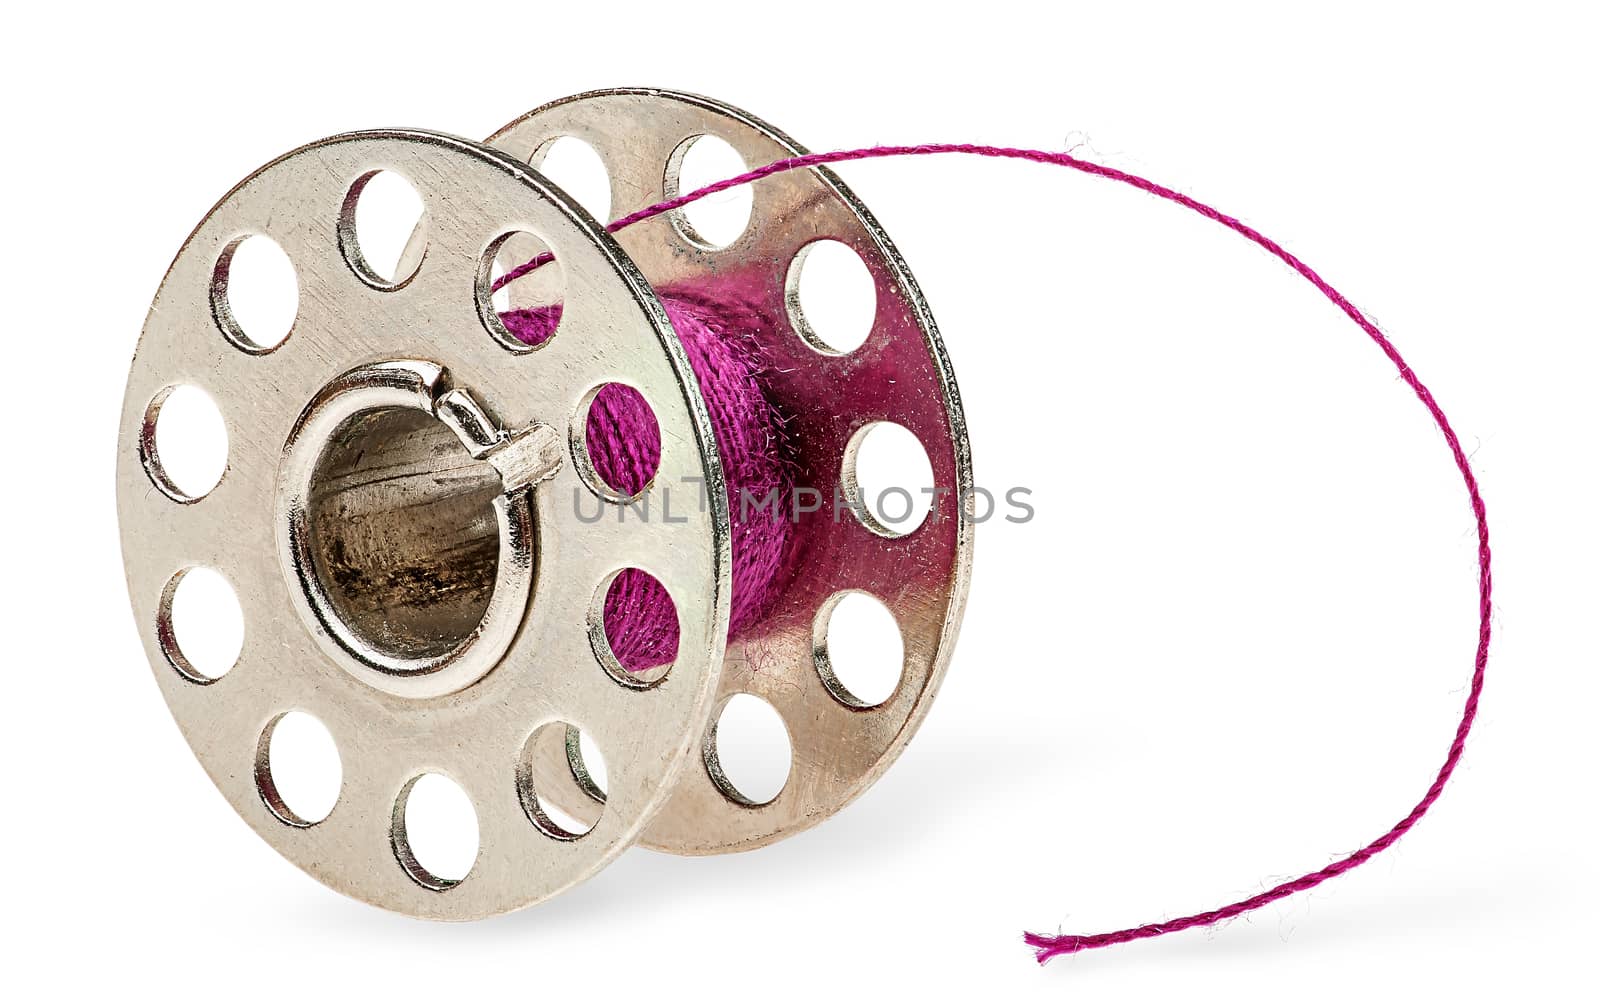 Metal spool with burgundy thread by Cipariss